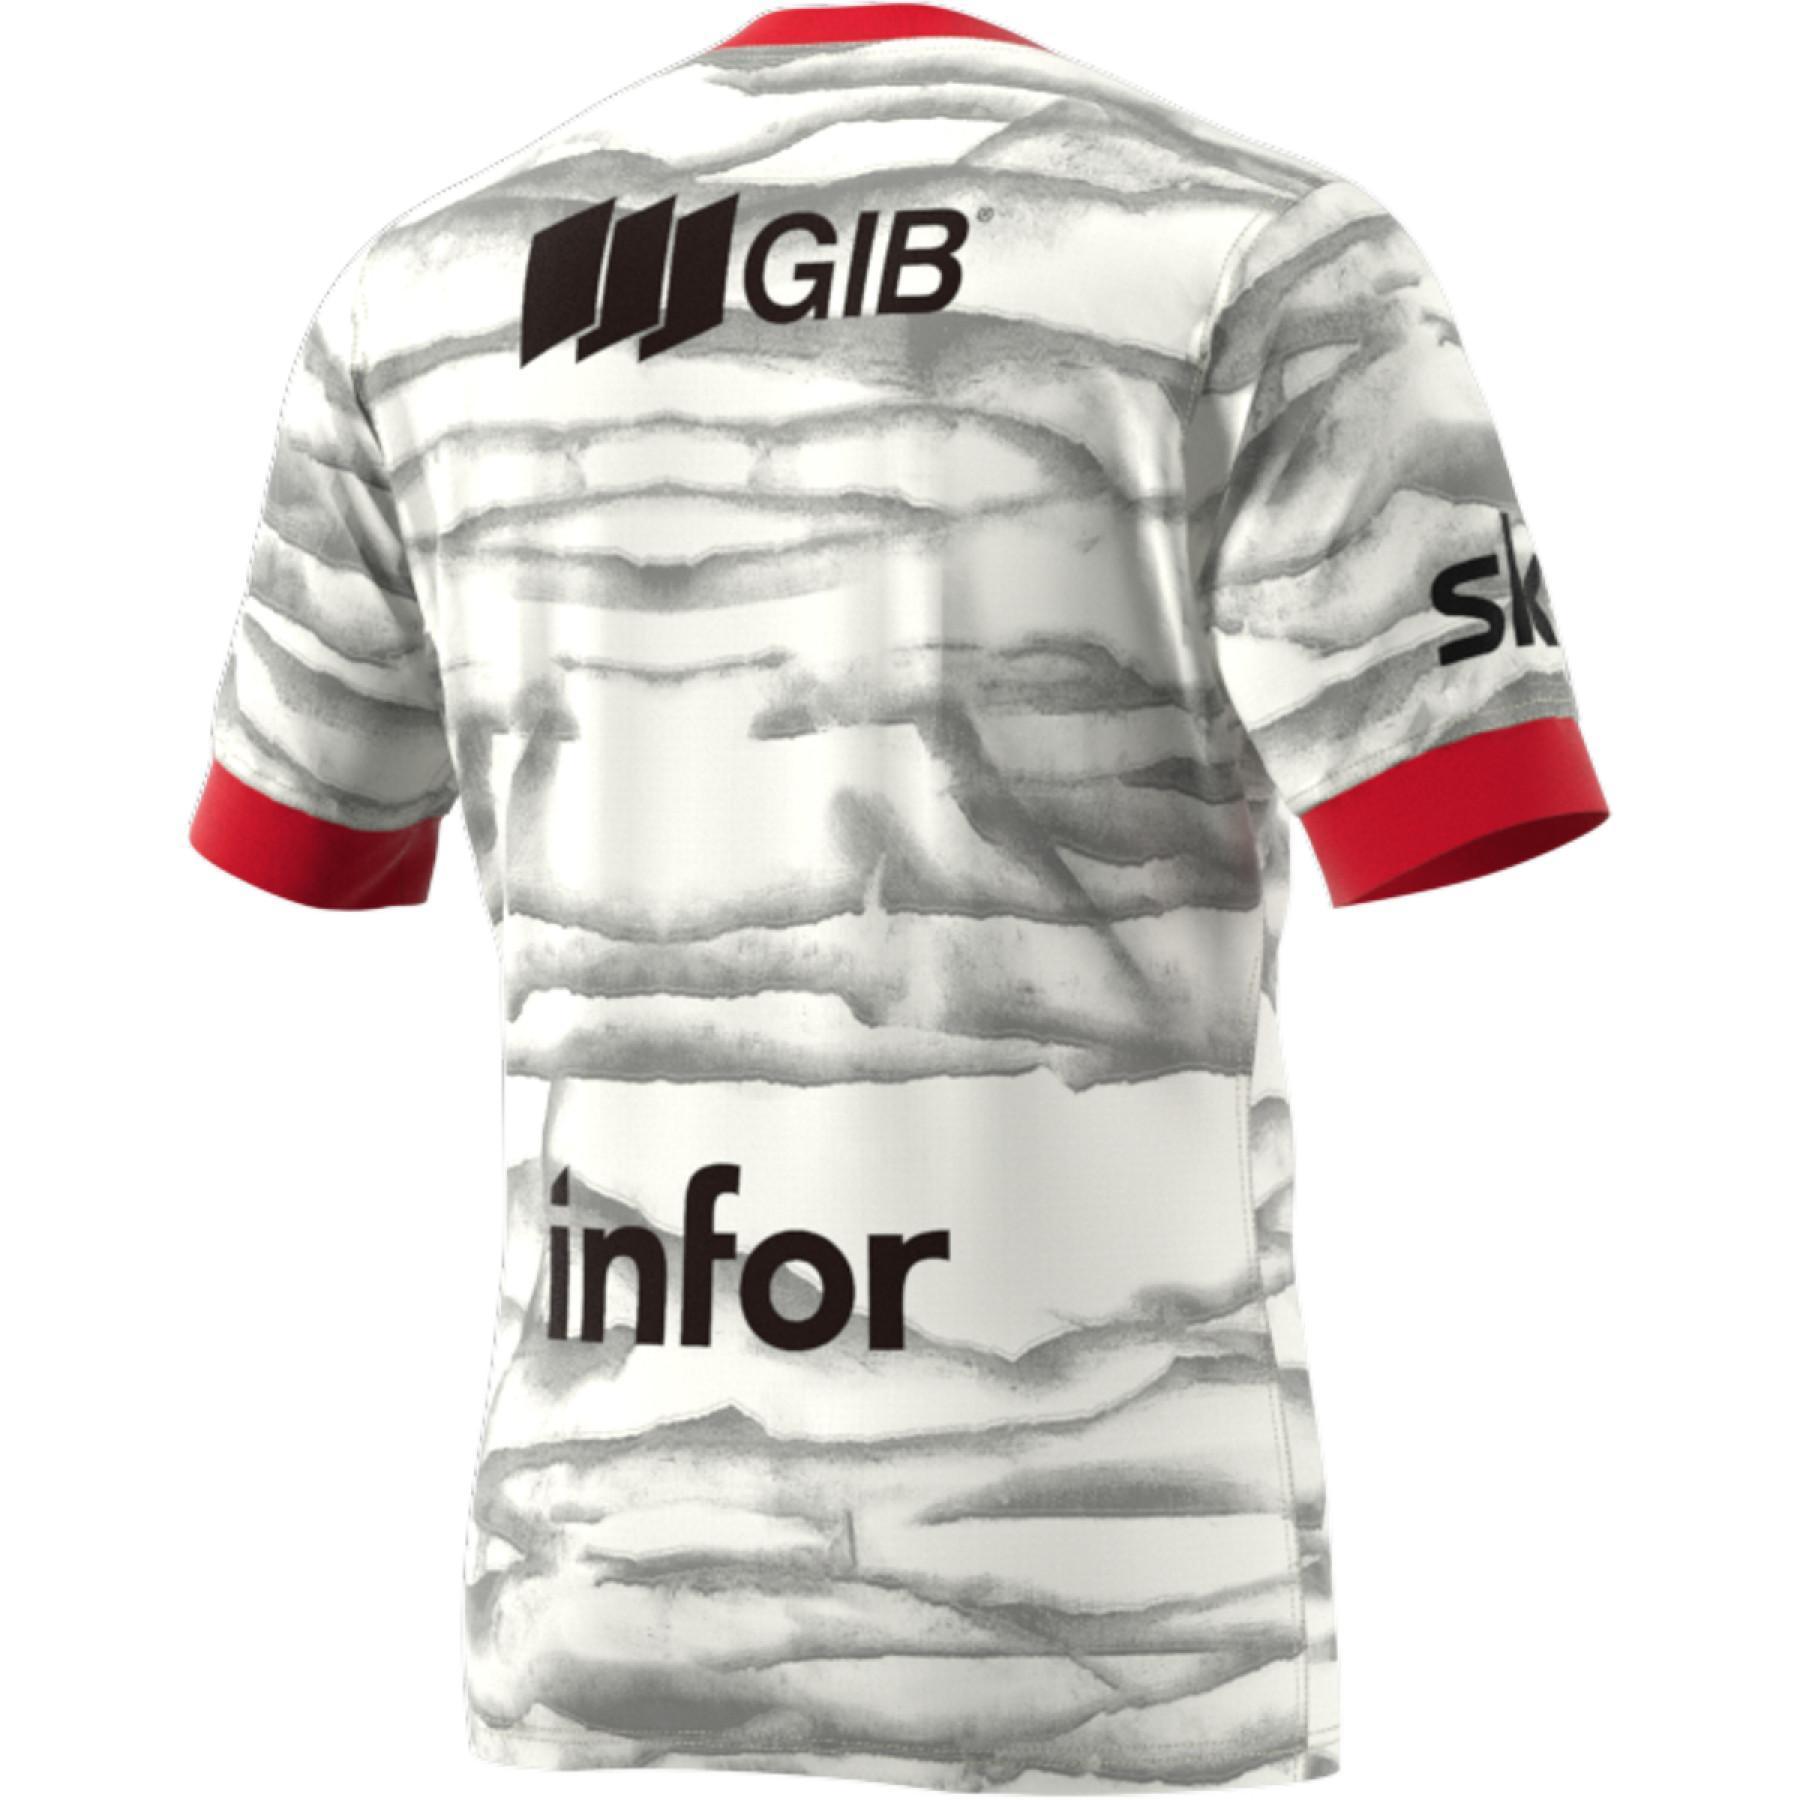 Jersey adidas Crusaders Rugby Alternate Replica